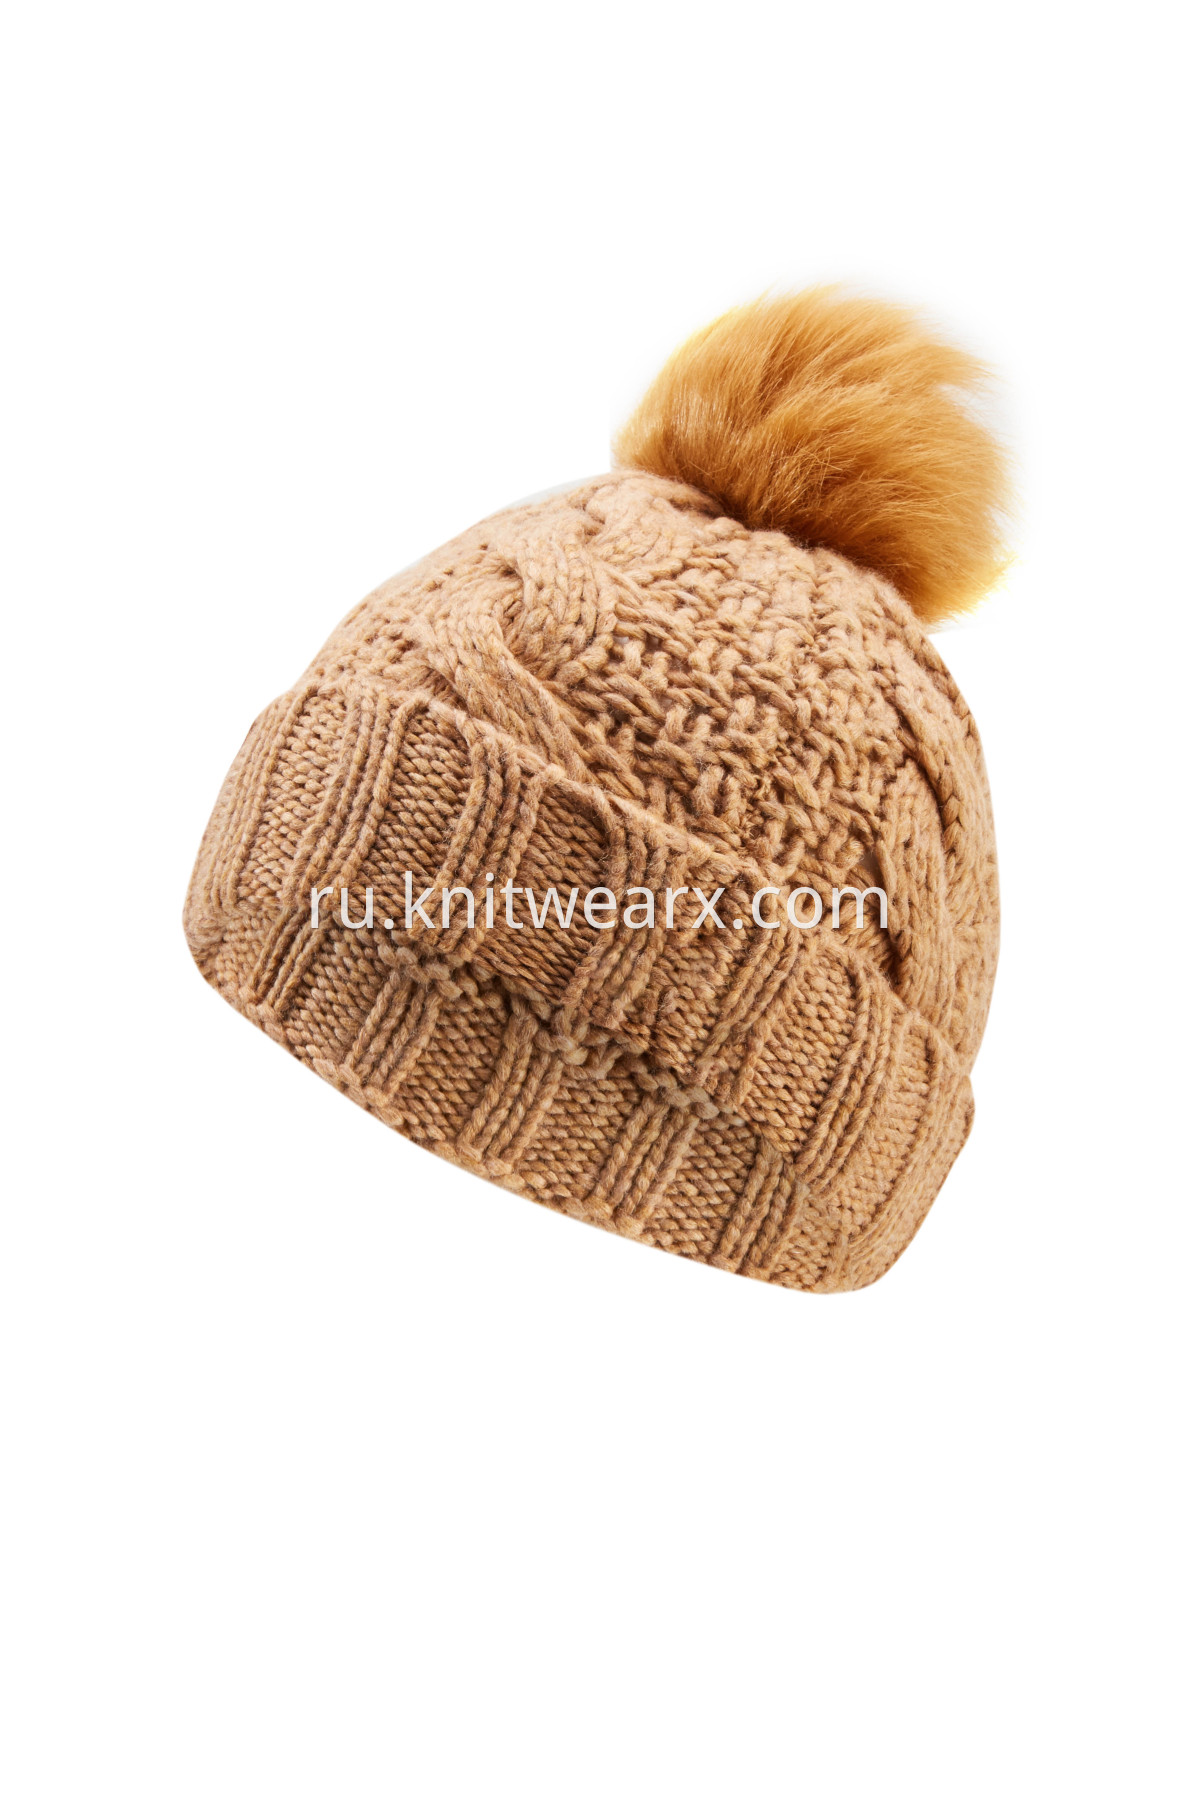 Girls' Winter Knitted Beanie Bobble Hat Faux Fur Ball Cap